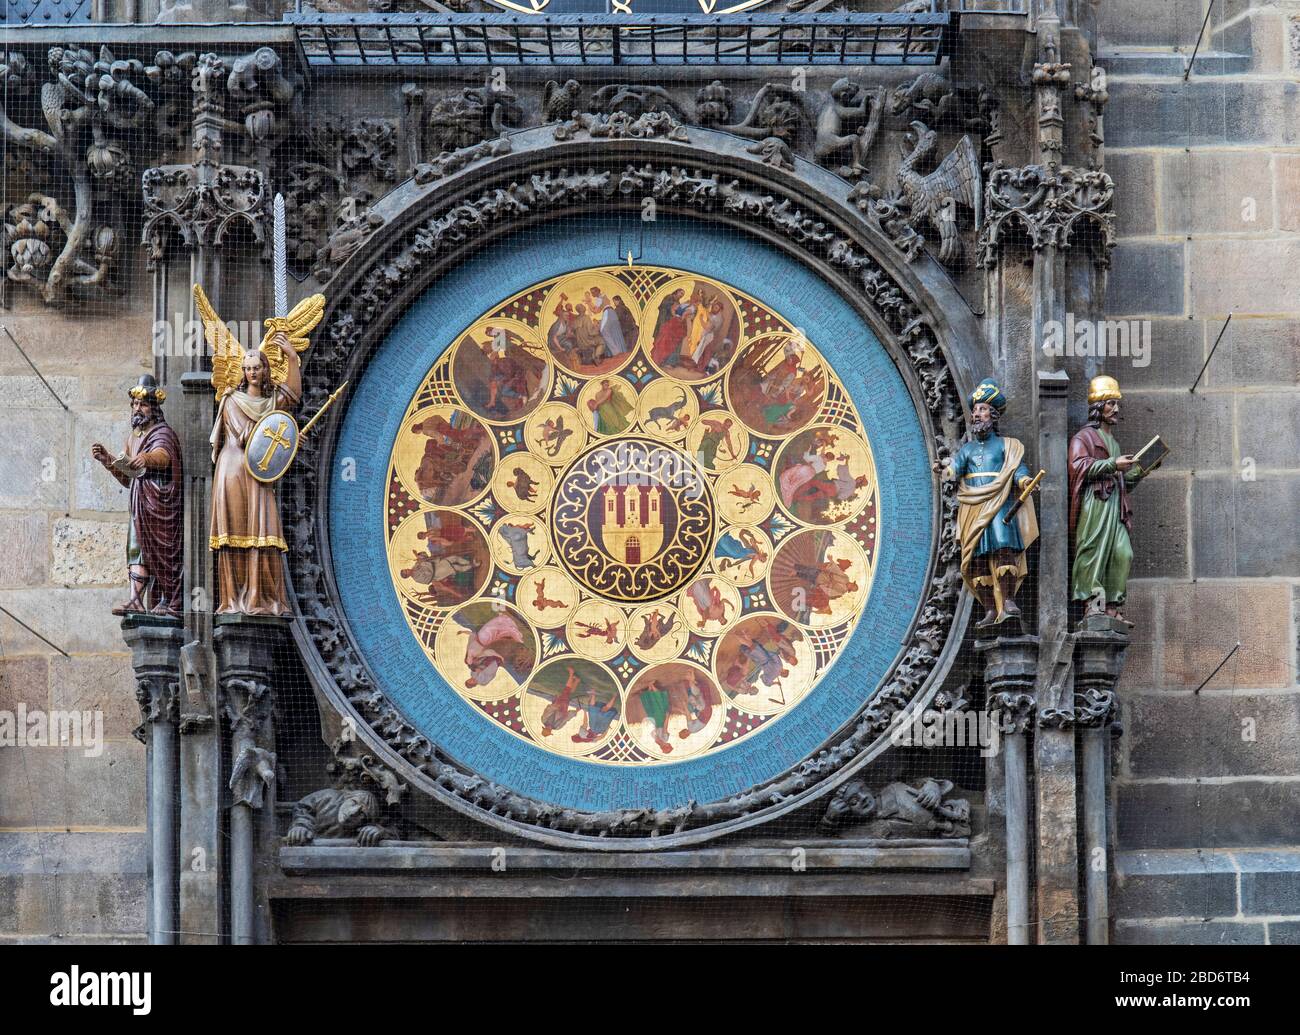 Astronomische Uhr am Altstädter Rathaus, Prag, Tscechische Republik Foto Stock